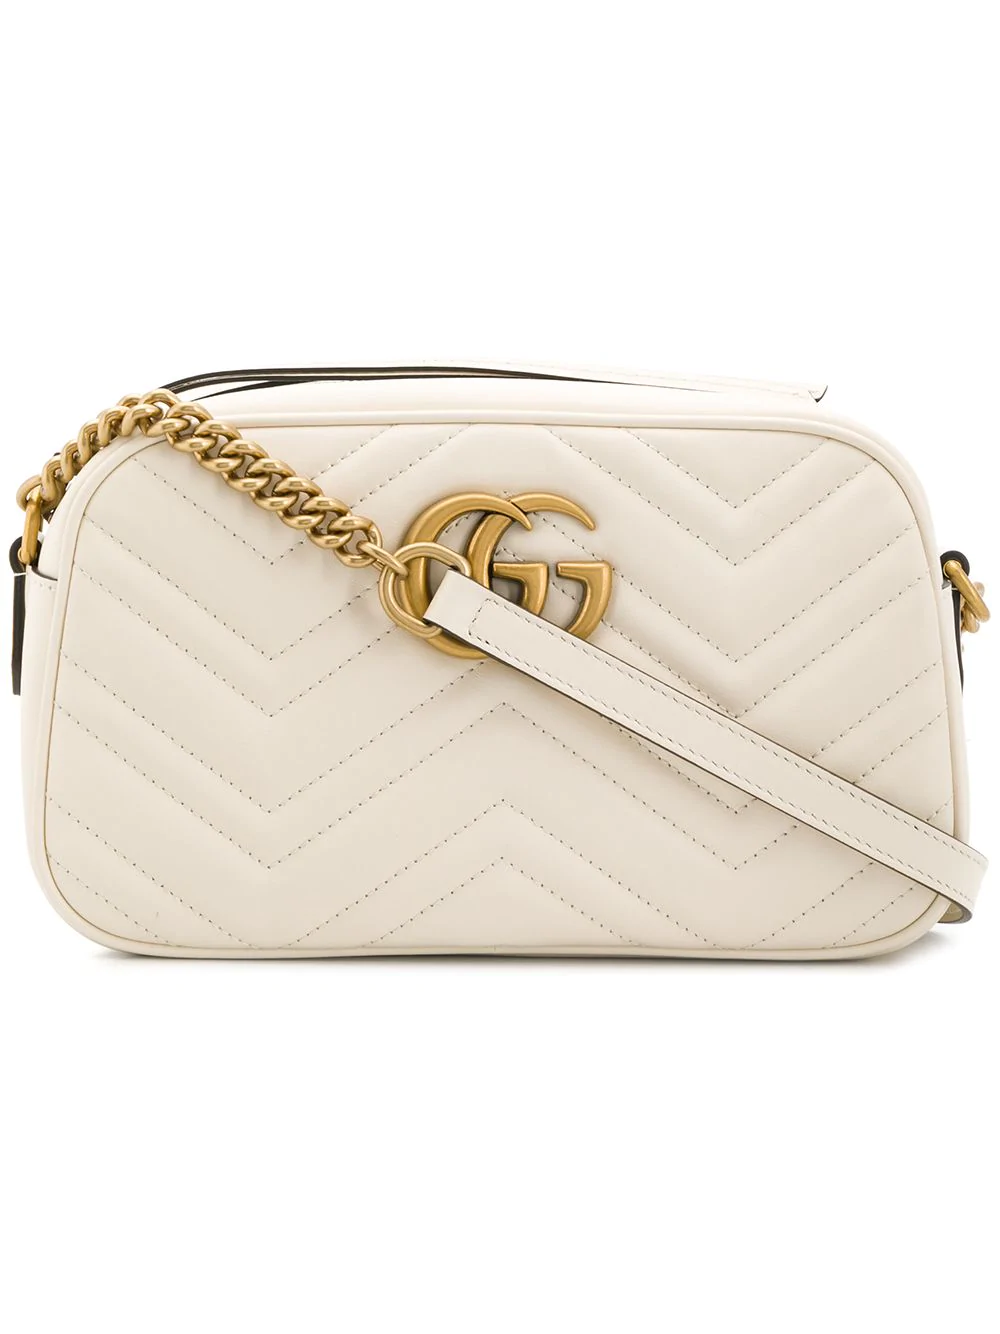 Gucci Gg Marmont Bag - White | ModeSens